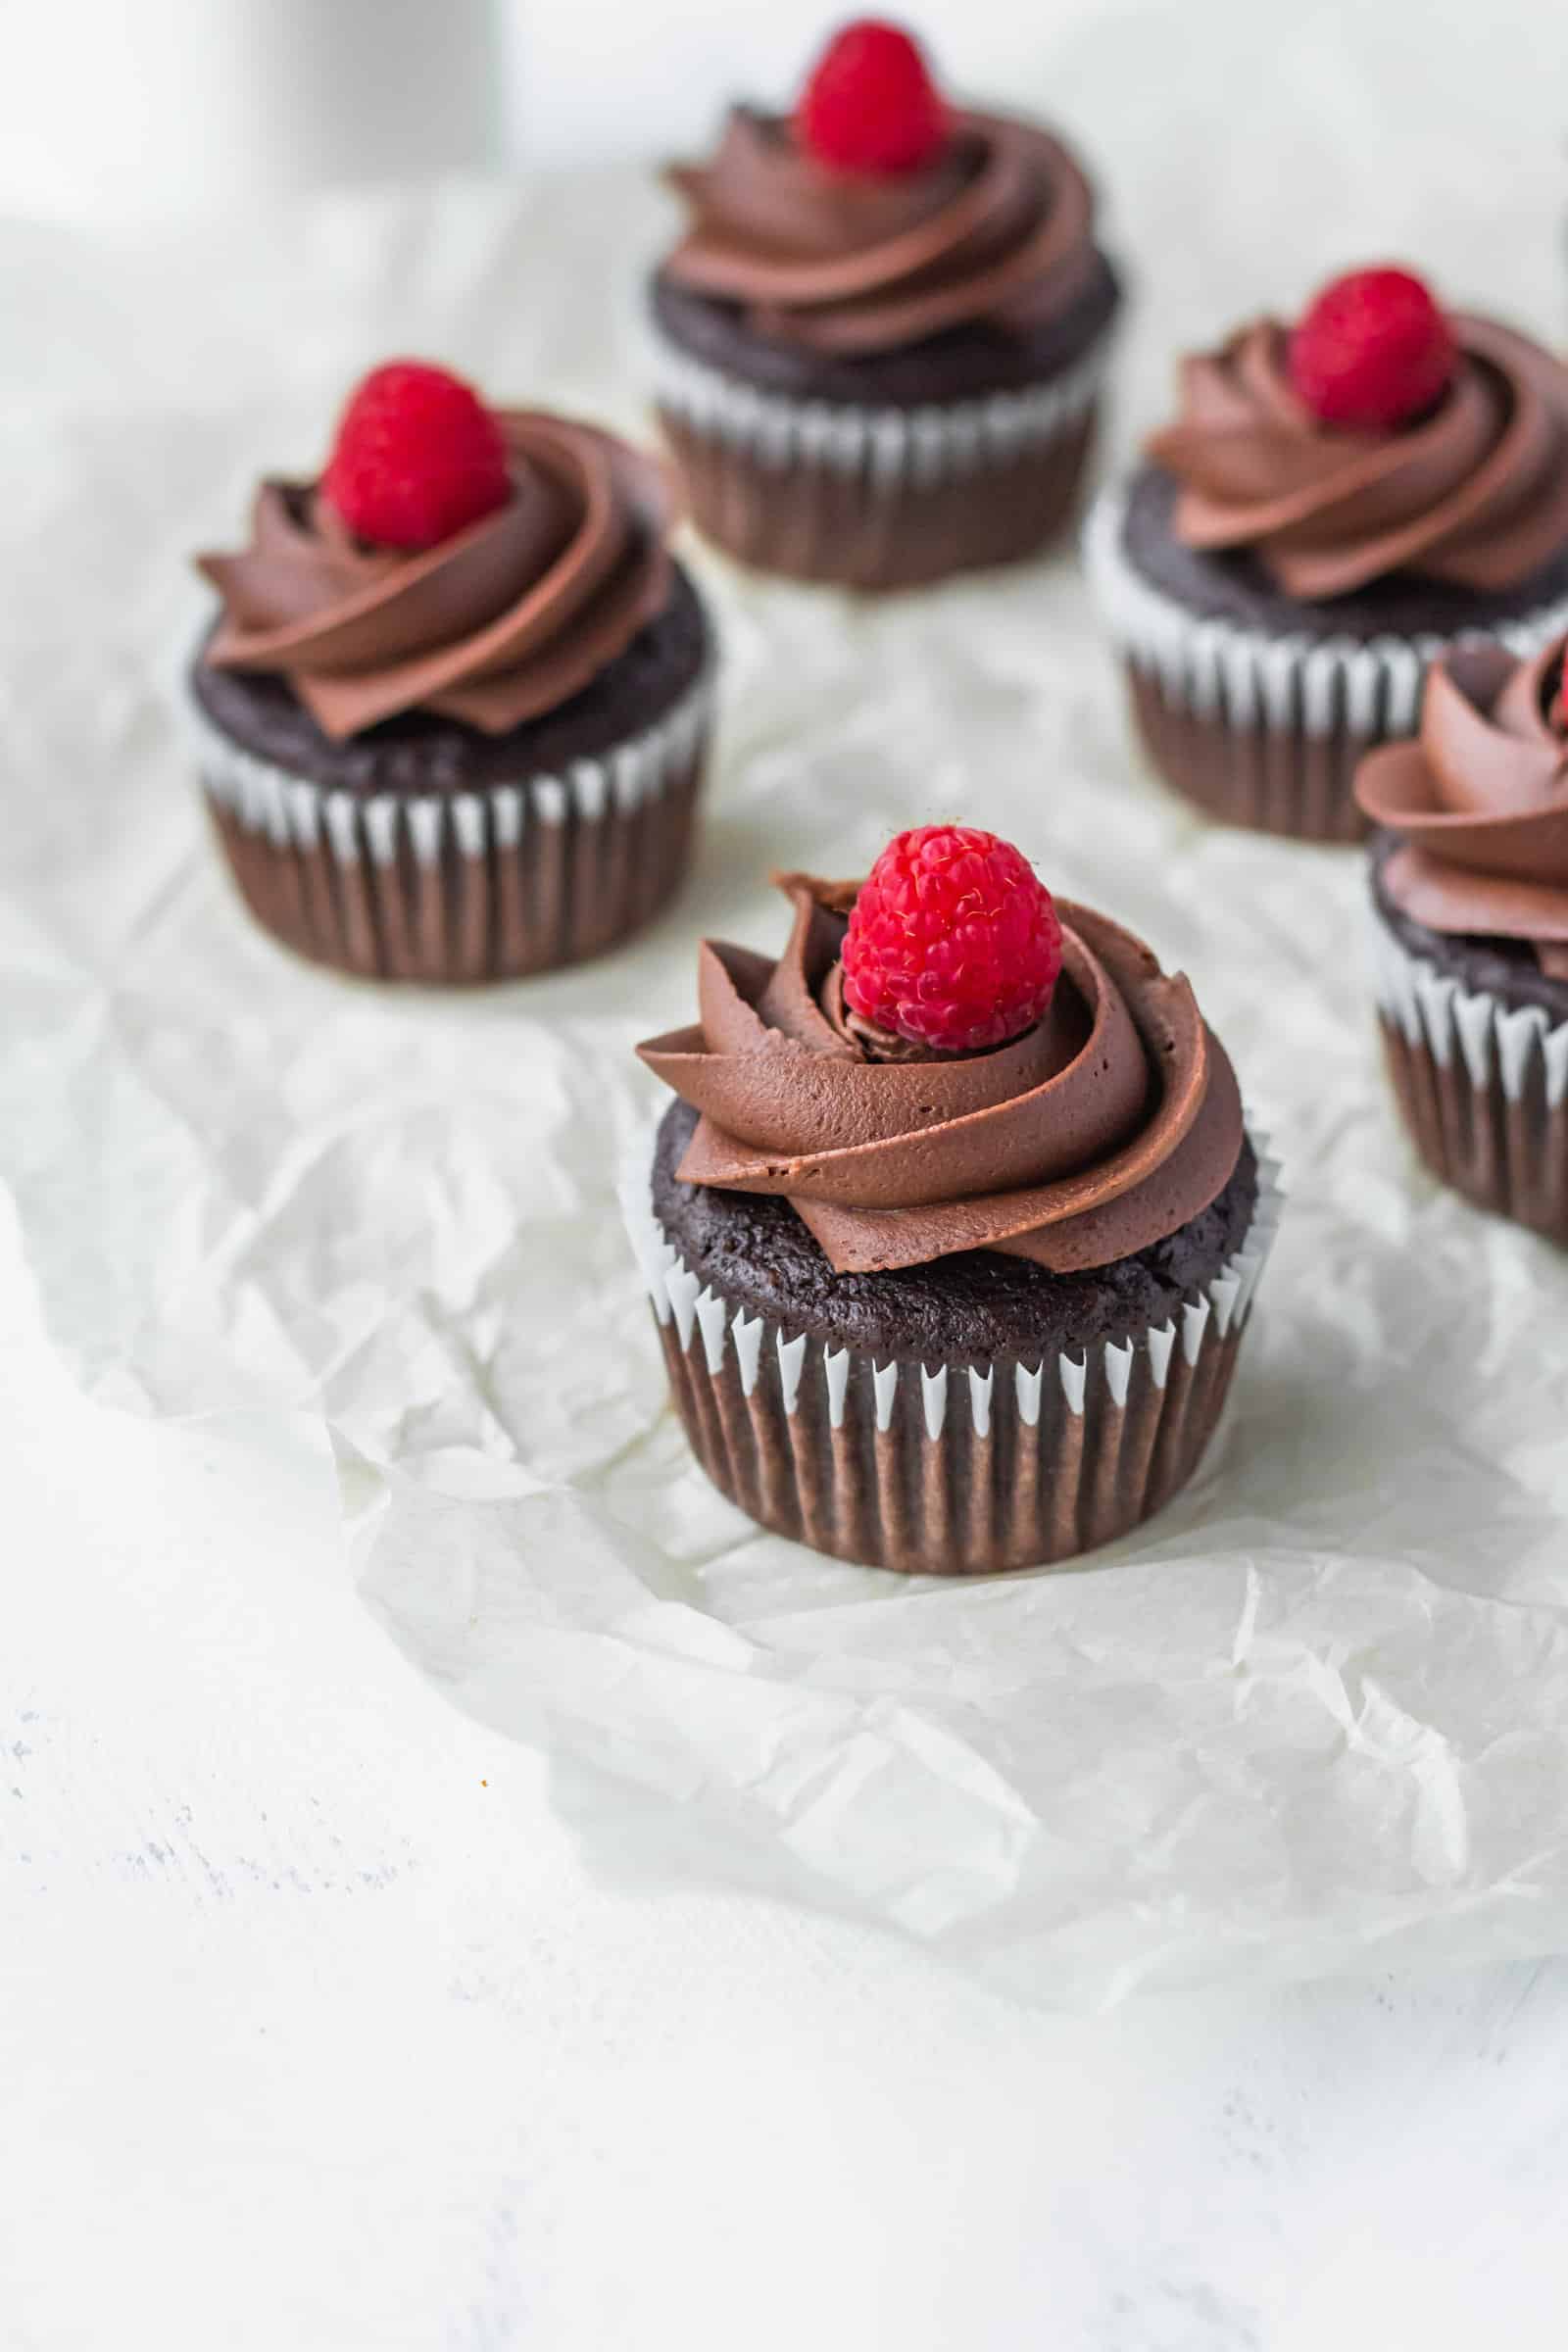 The perfect chocolate cupcakes for your vegan Valentine on Valentine’s Day! #chocolatecupcakes #bananacupcakes #valentinesdaydessert #veganvalentinesday #vegancupcakes